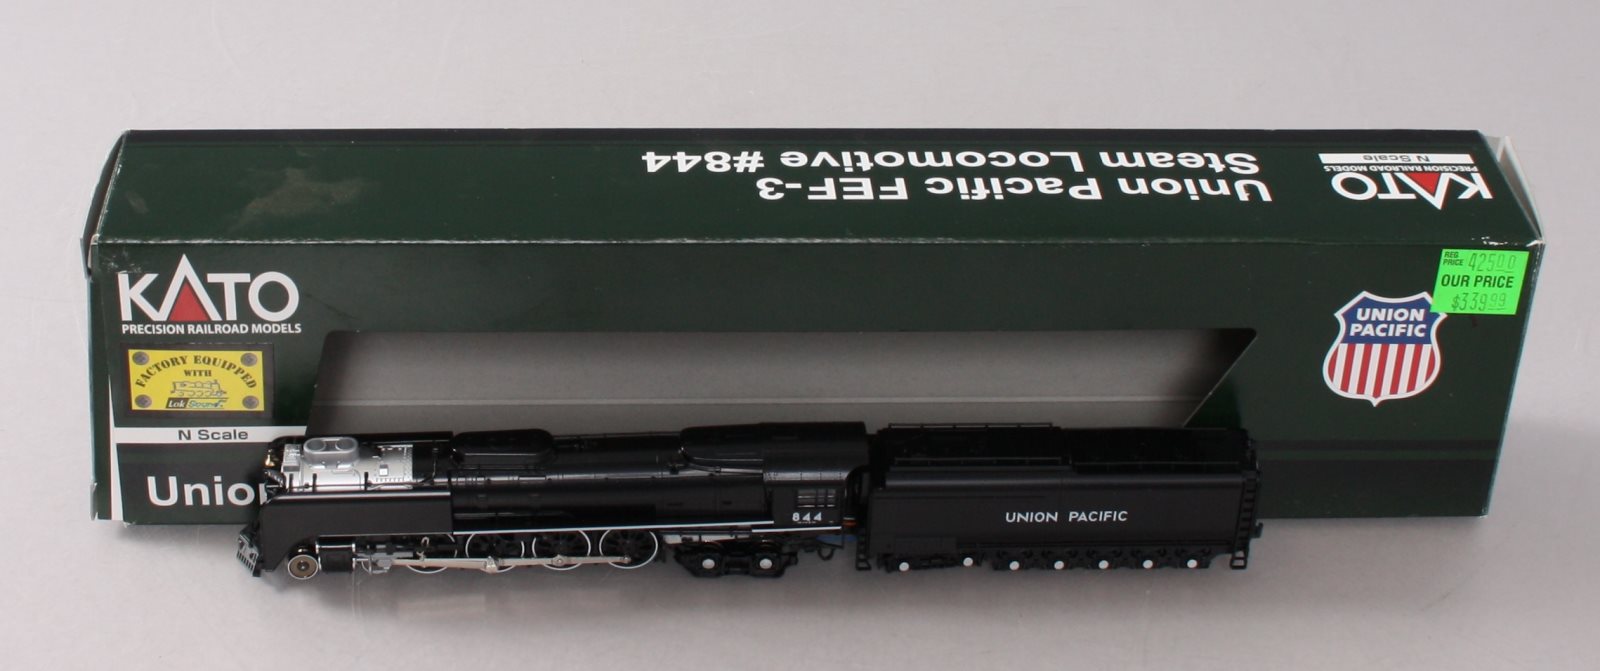 Kato 1260401LS N Union Pacific FEF-3 Series 4-8-4 Steam Locomotive #844